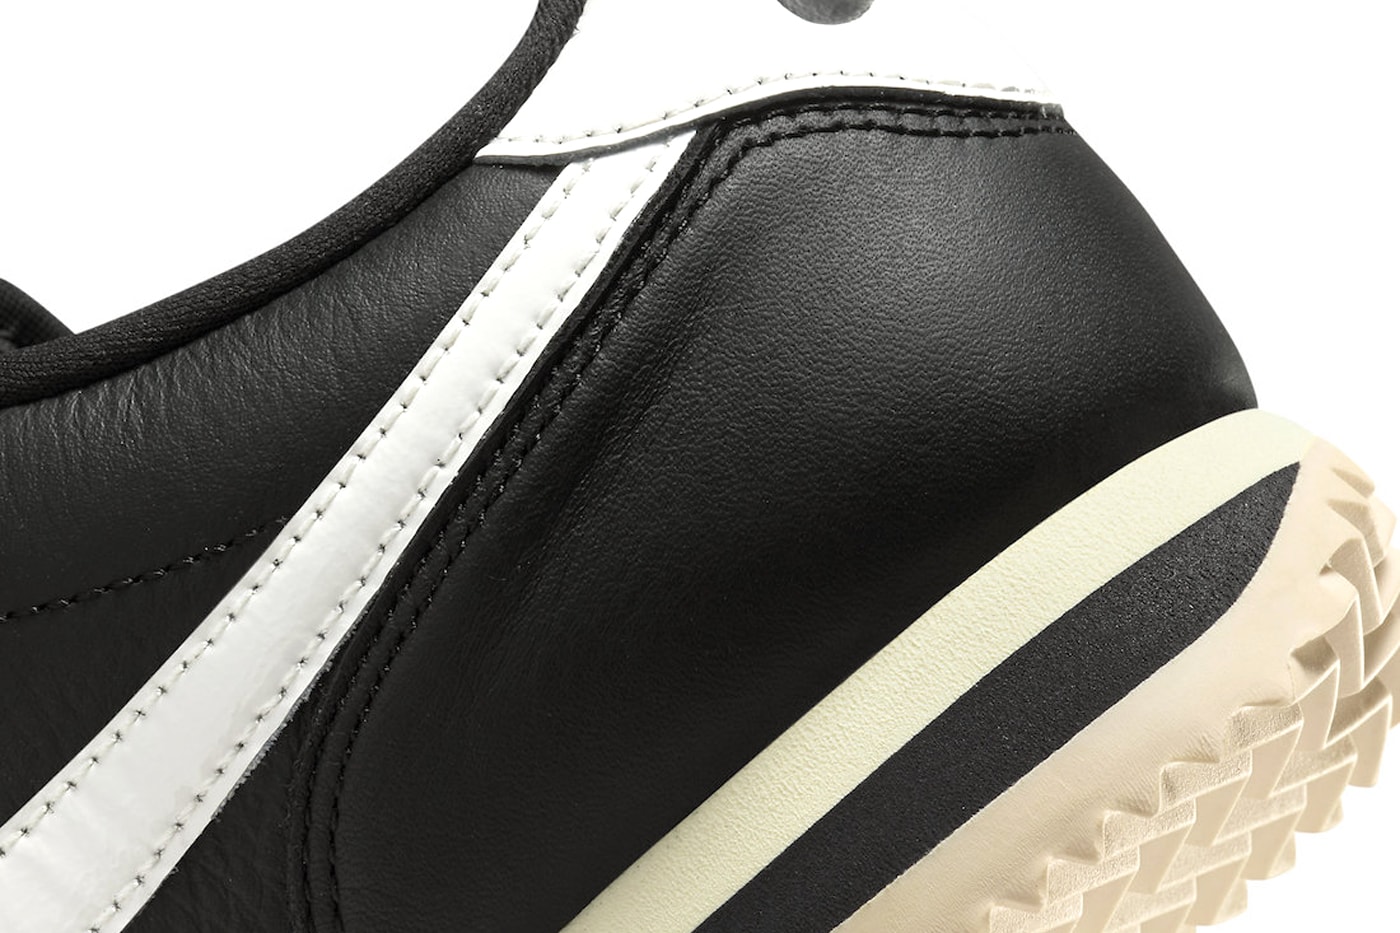 Nike Classic Cortez Premium Black/Sail Release